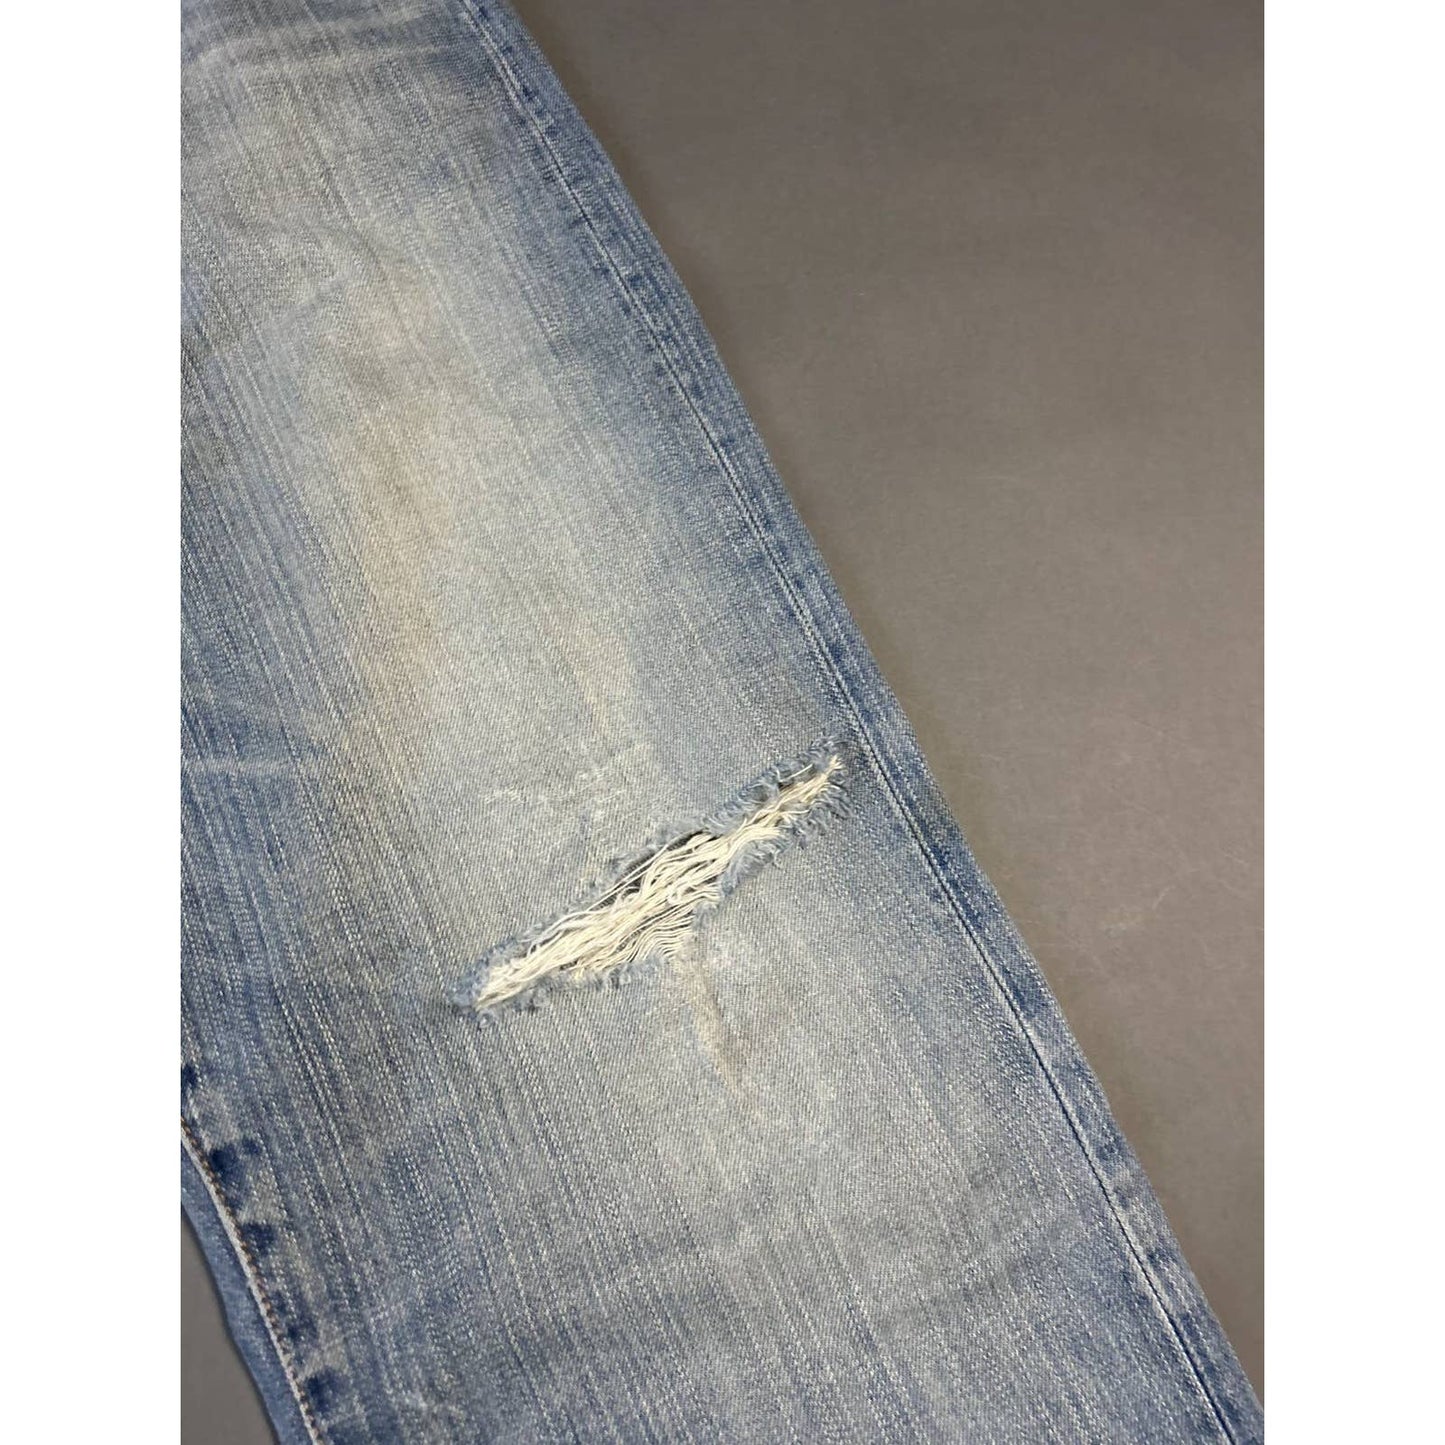 Evisu jeans vintage japanese denim pants seagulls baby blue